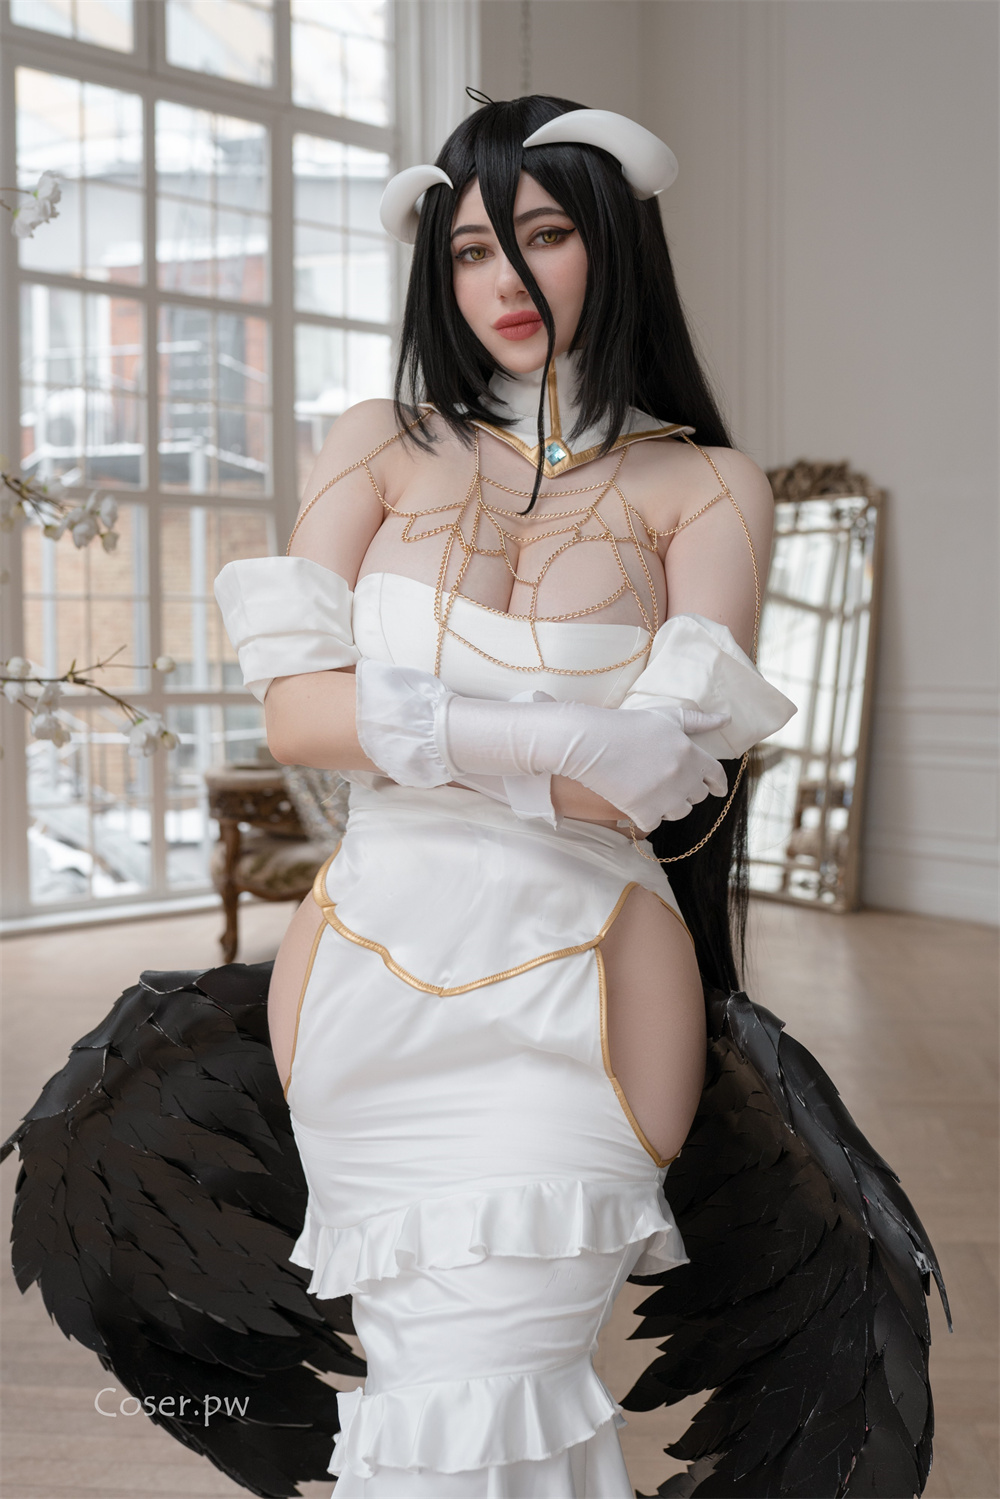 Alina becker albedo cosplay